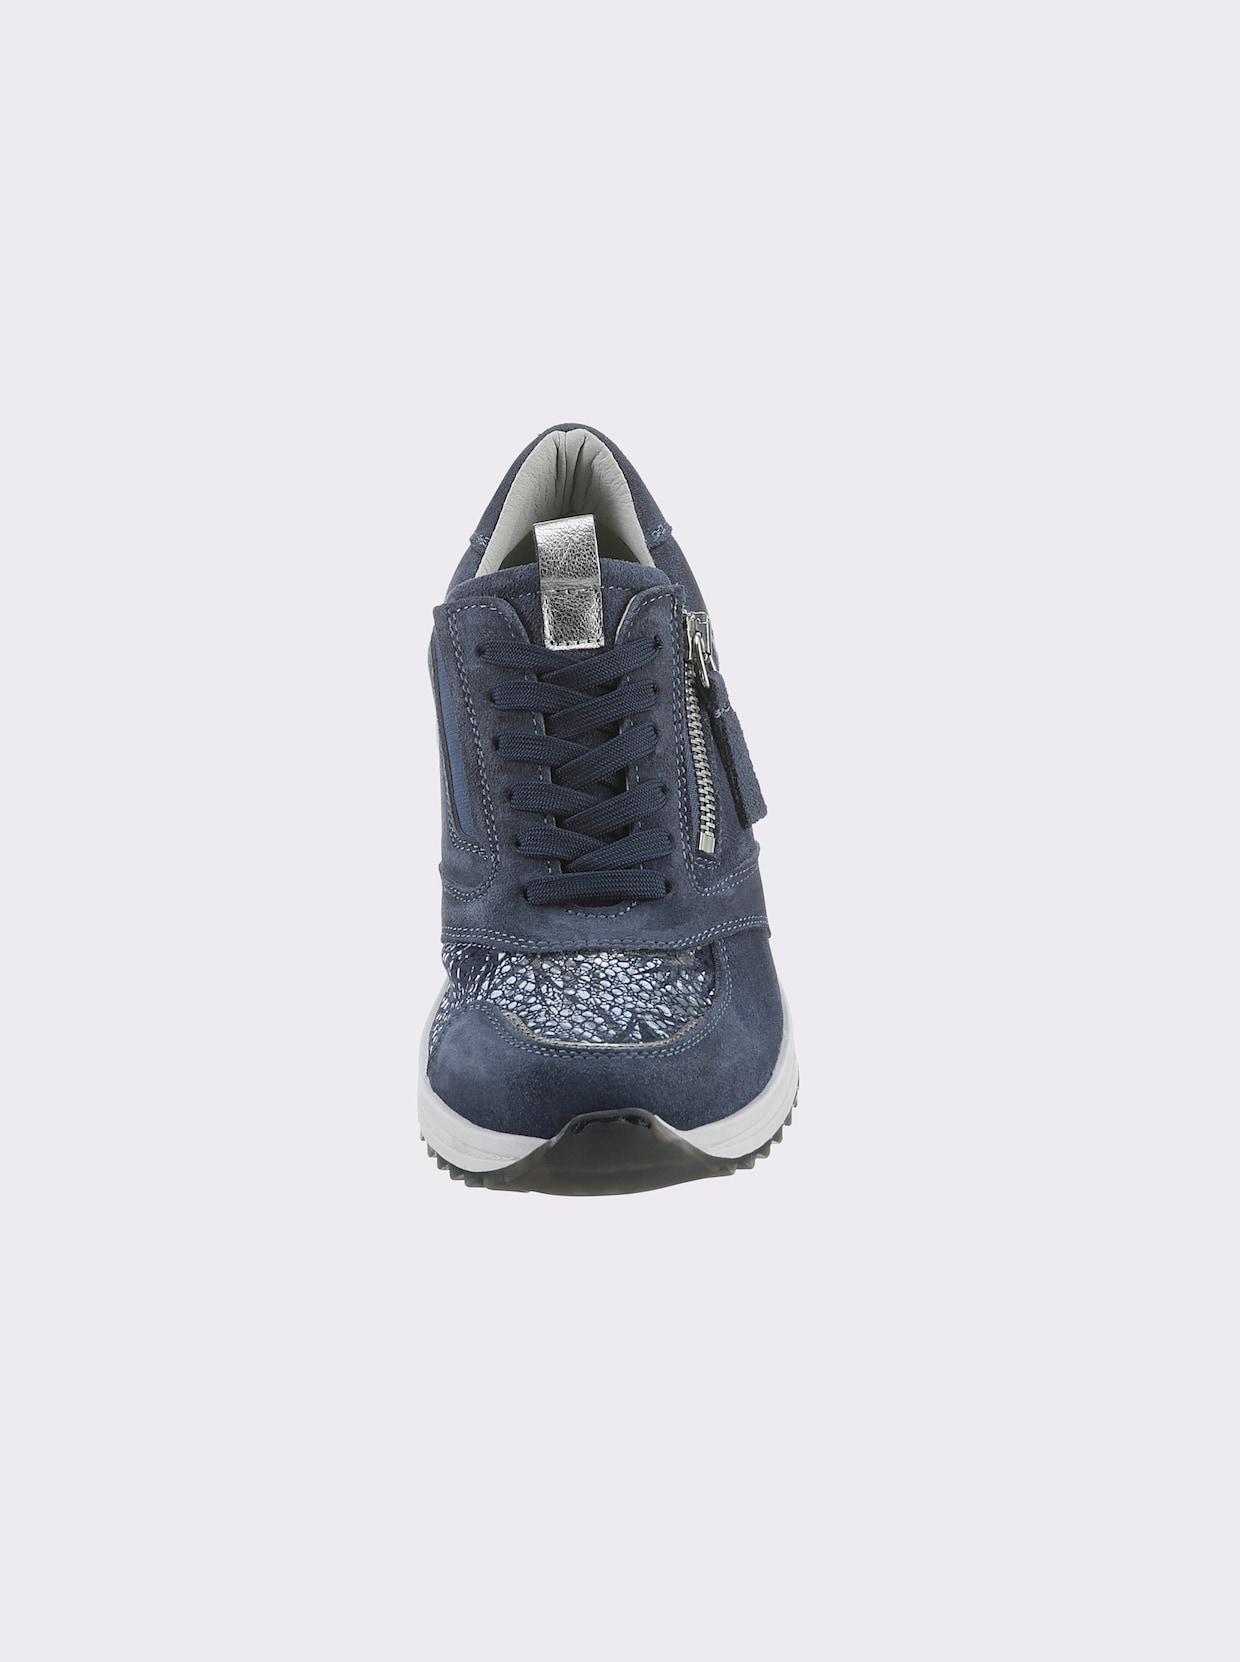 airsoft modern+ Sneaker - jeansblau-gemustert